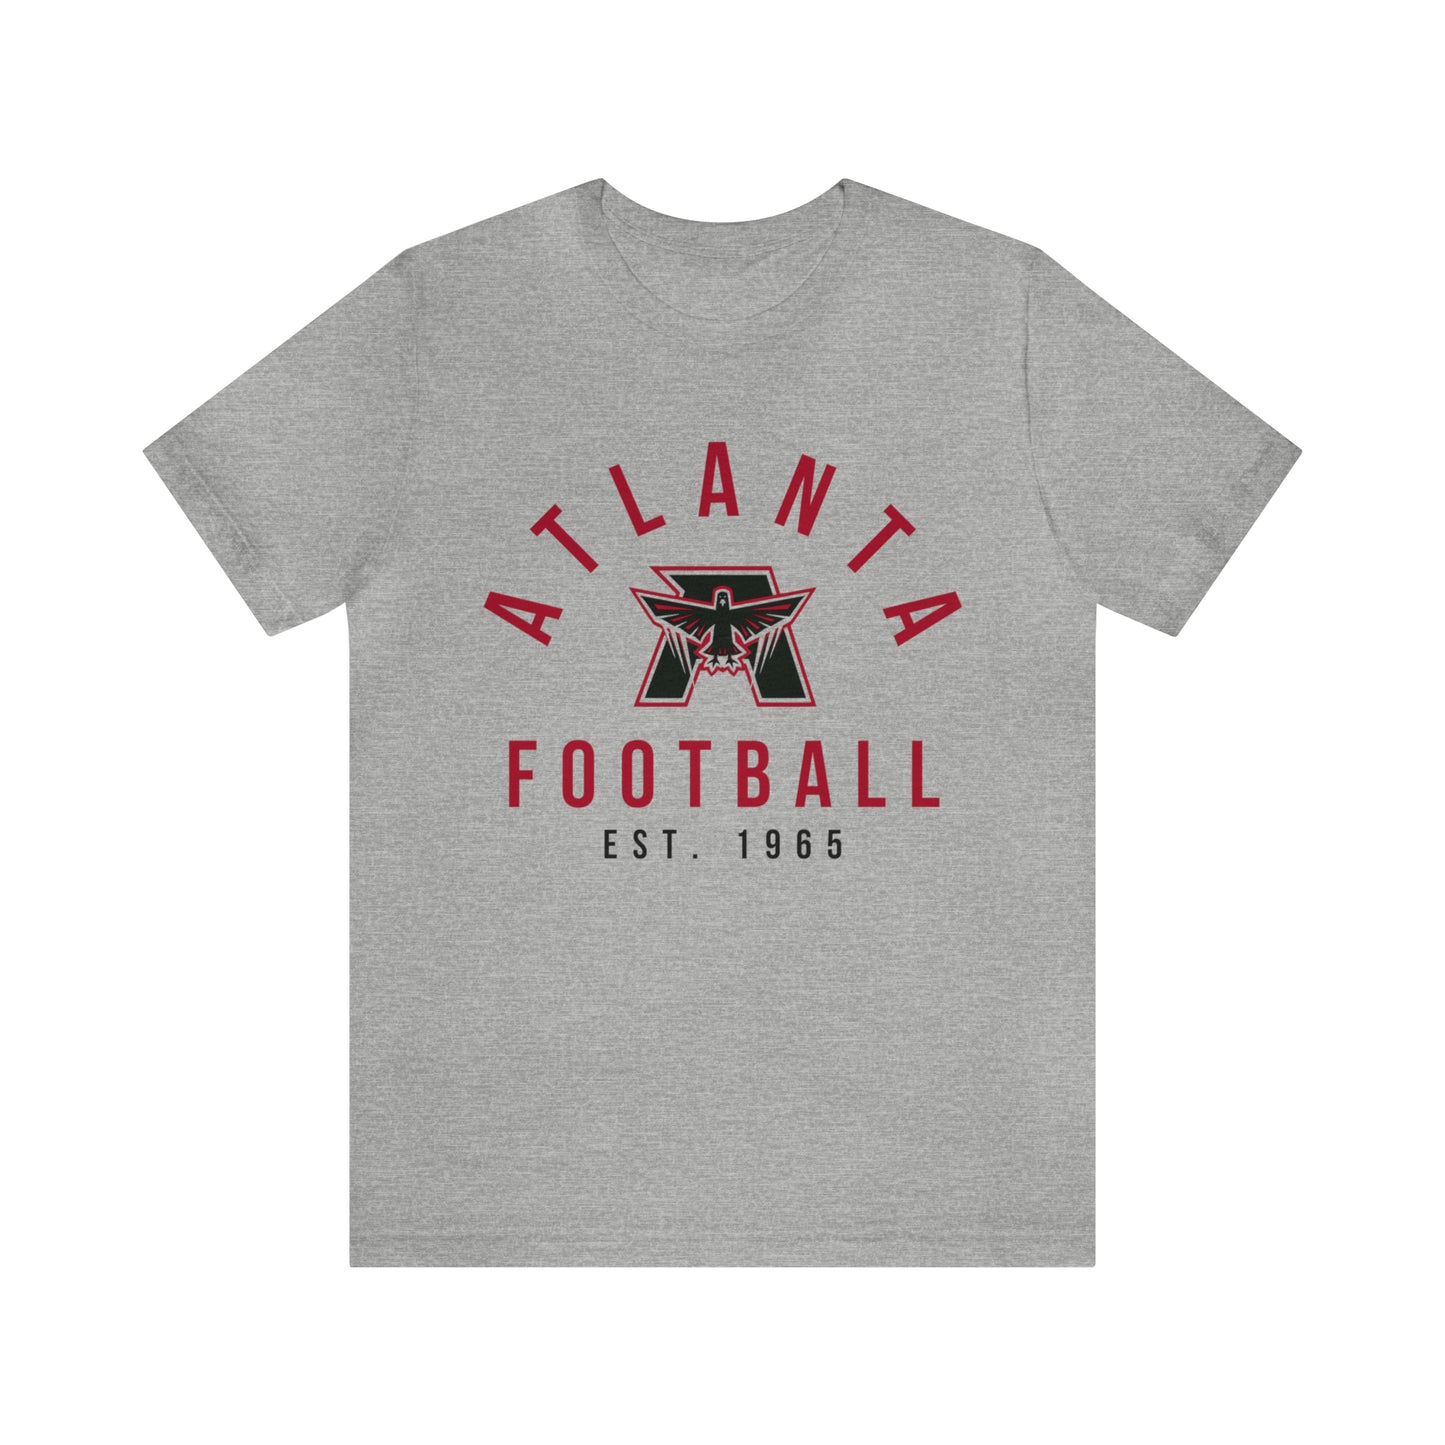 Vintage Atlanta Falcons Short Sleeve T-Shirt - Retro Unisex Football Tee - Men's & Women's - Design 4 gray